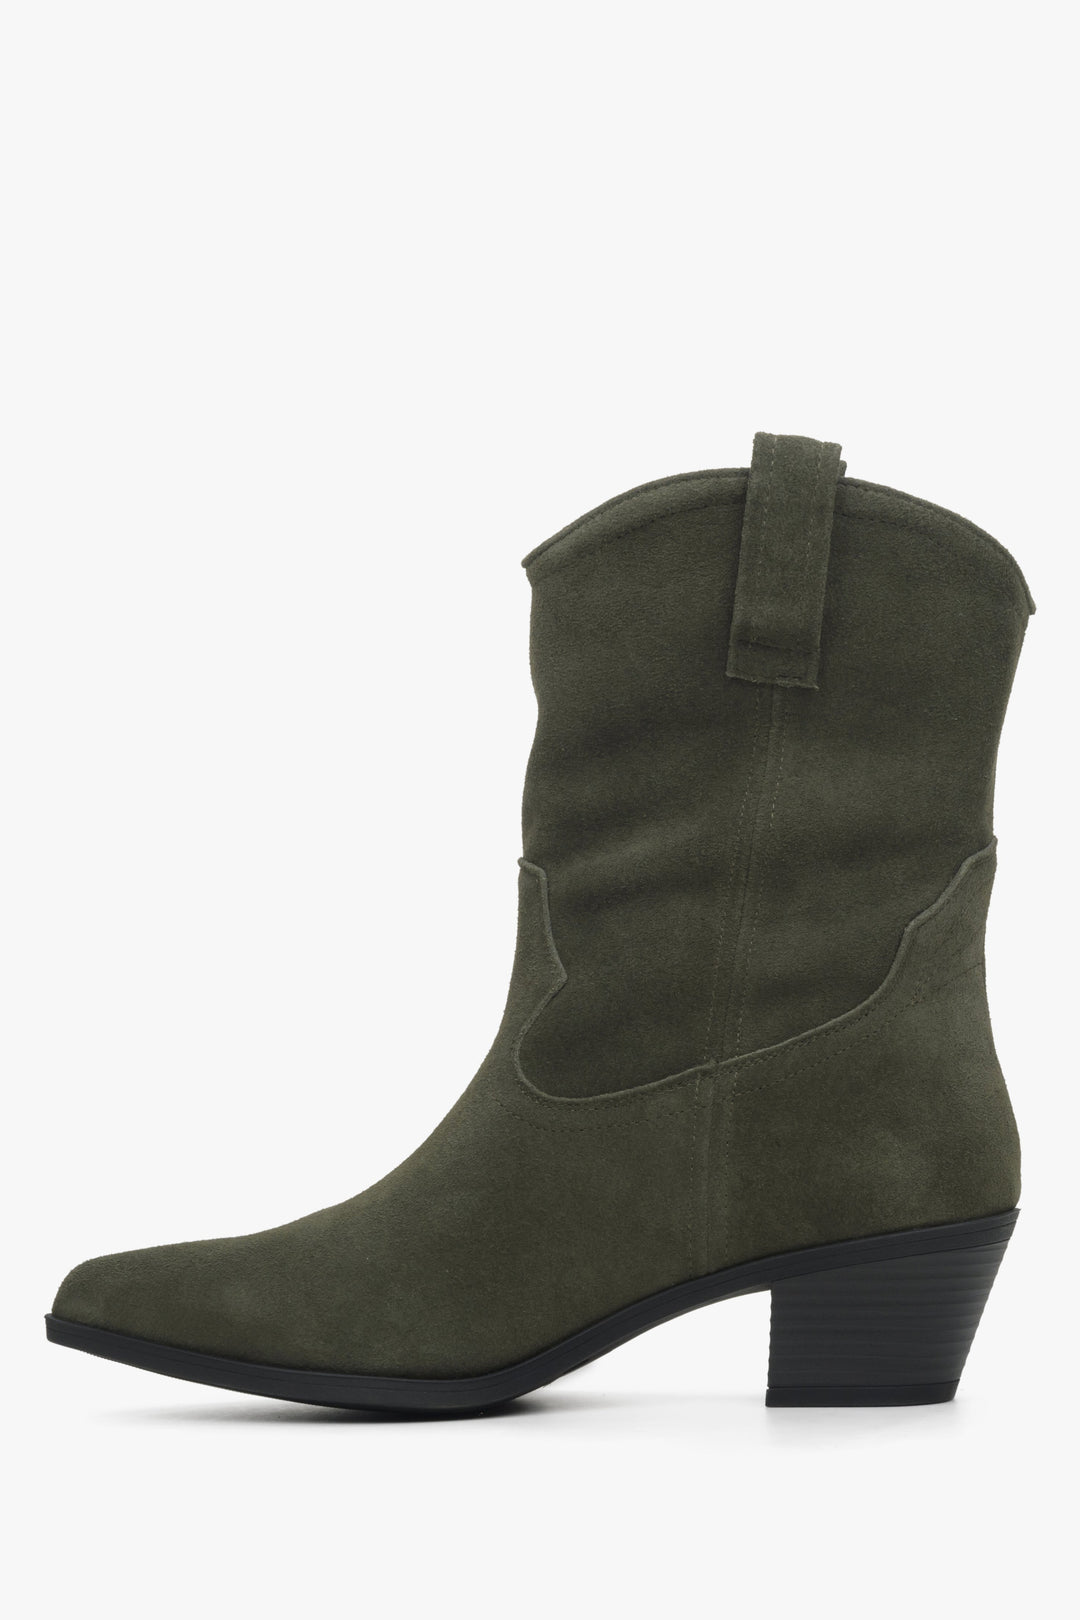 Women's dark green low-cut cowboy boots made of genuine suede by Estro - shoe profile.